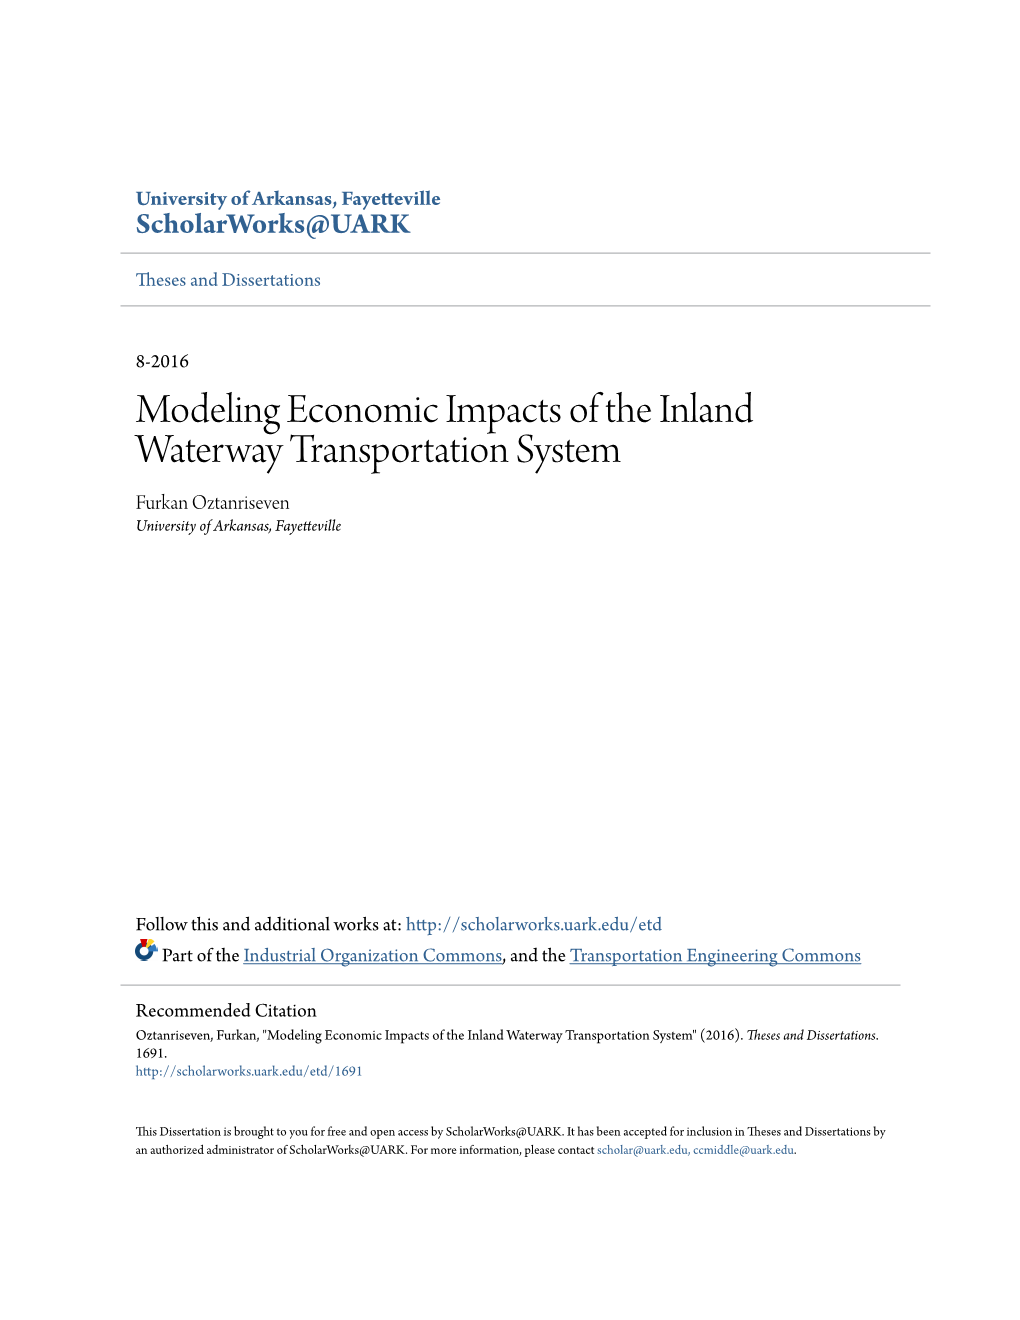 Modeling Economic Impacts of the Inland Waterway Transportation System Furkan Oztanriseven University of Arkansas, Fayetteville